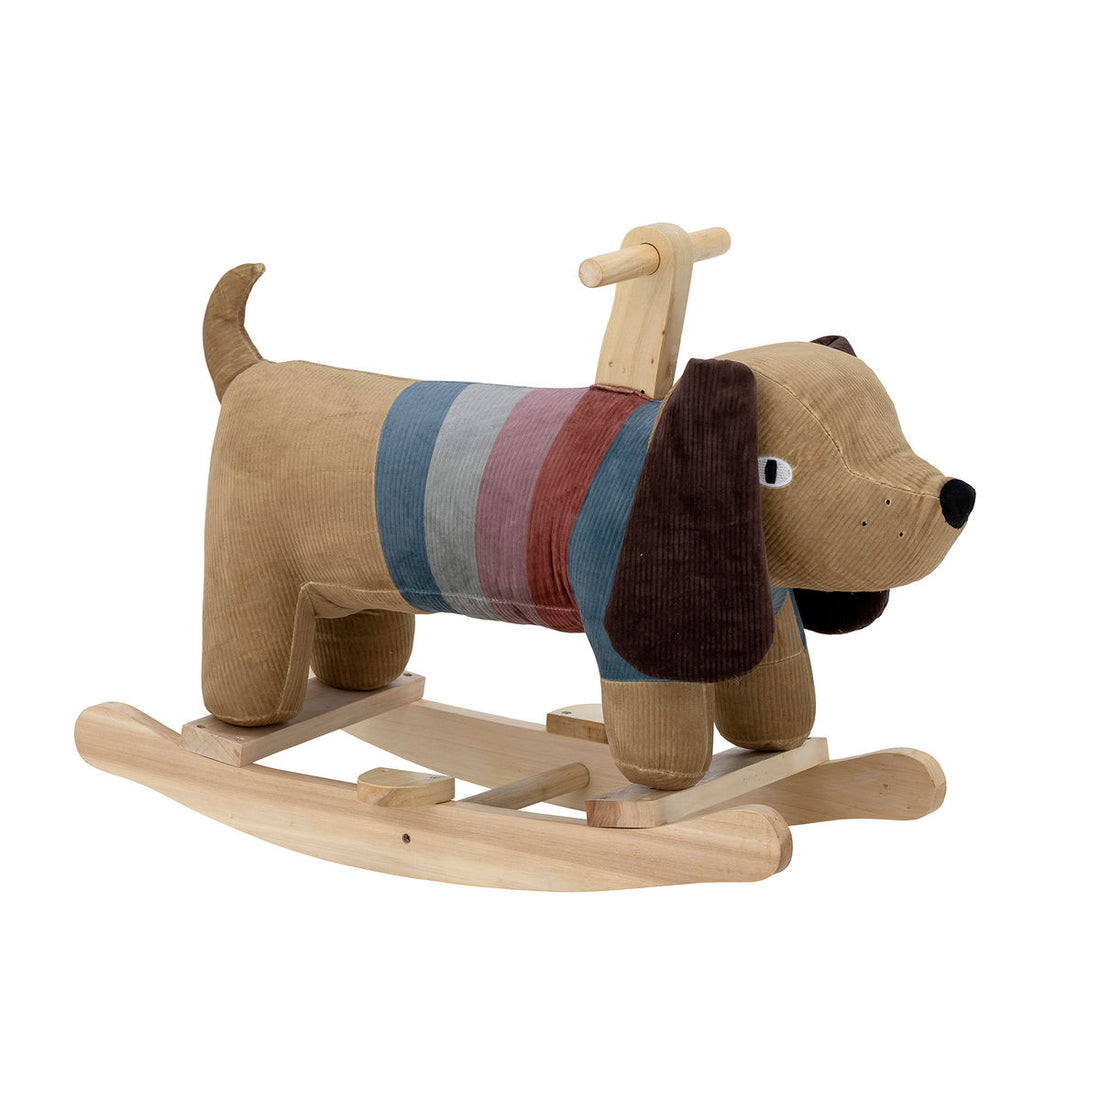 Bloomingville Mini Charlie rokkaava lelu, koira, ruskea, polyesteri